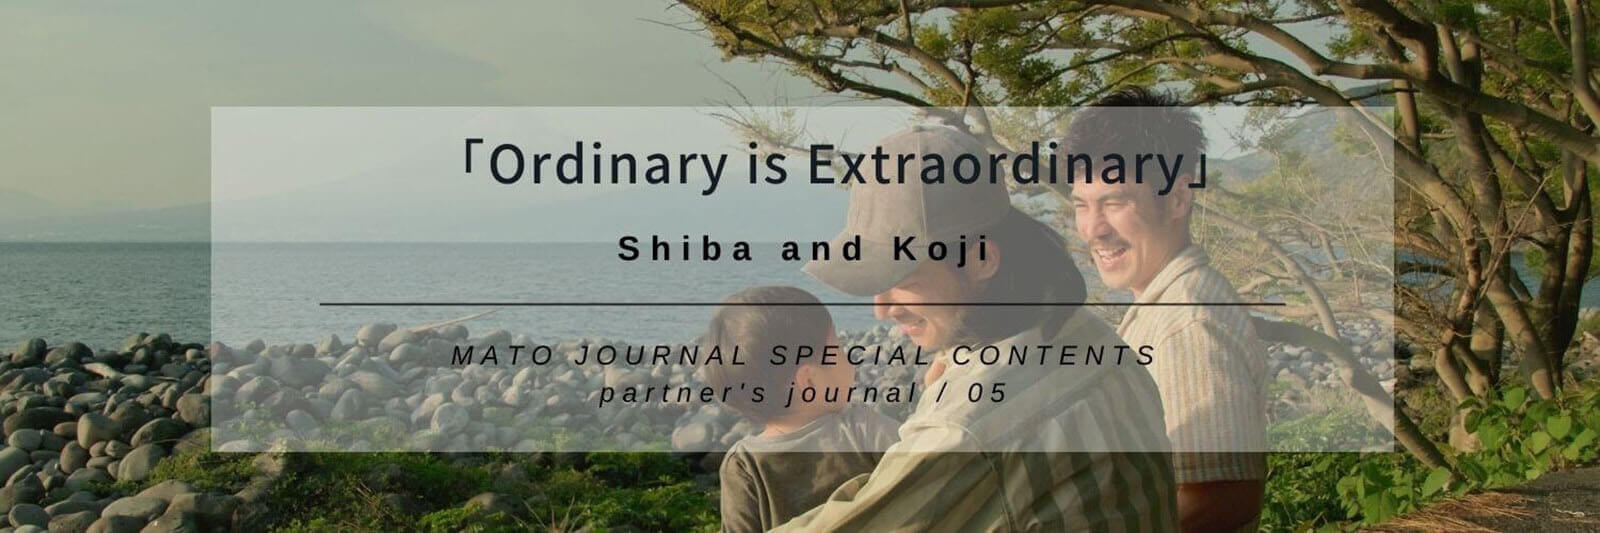 Ordinary is Extraordinary - Shiba and Koji - | MATO by MARLMARL